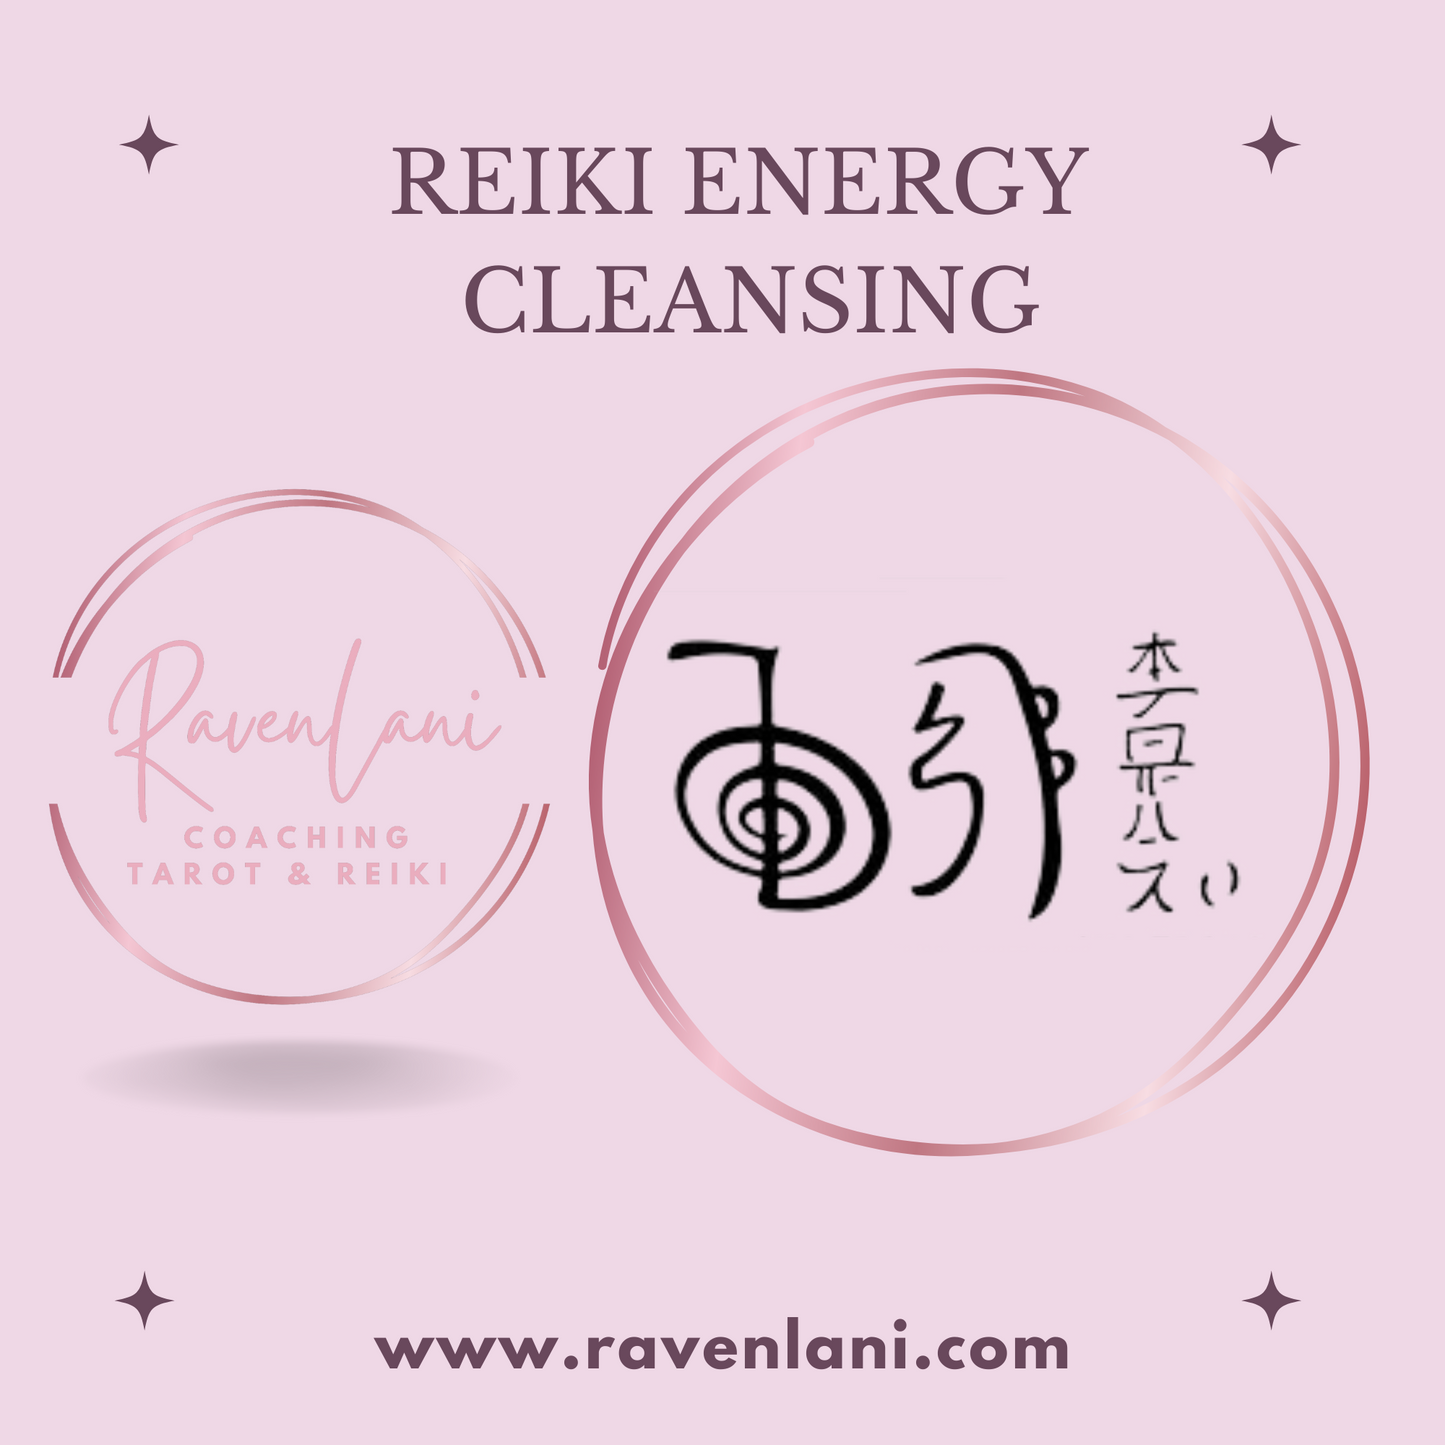 Reiki Energy Cleansing